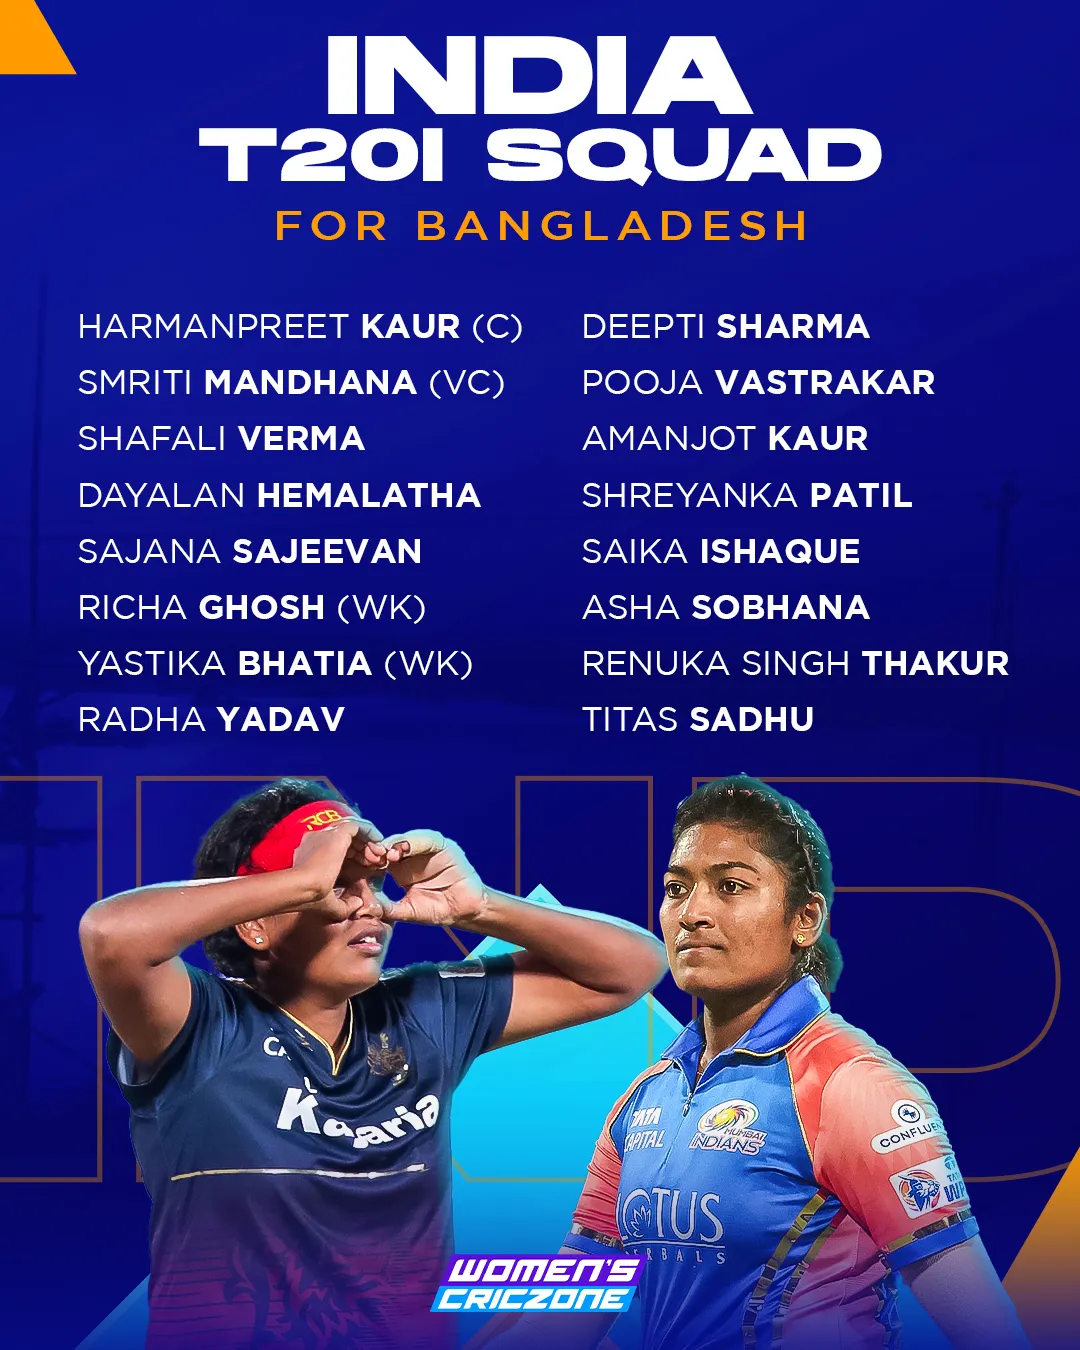 India T20I squad for Bangladesh